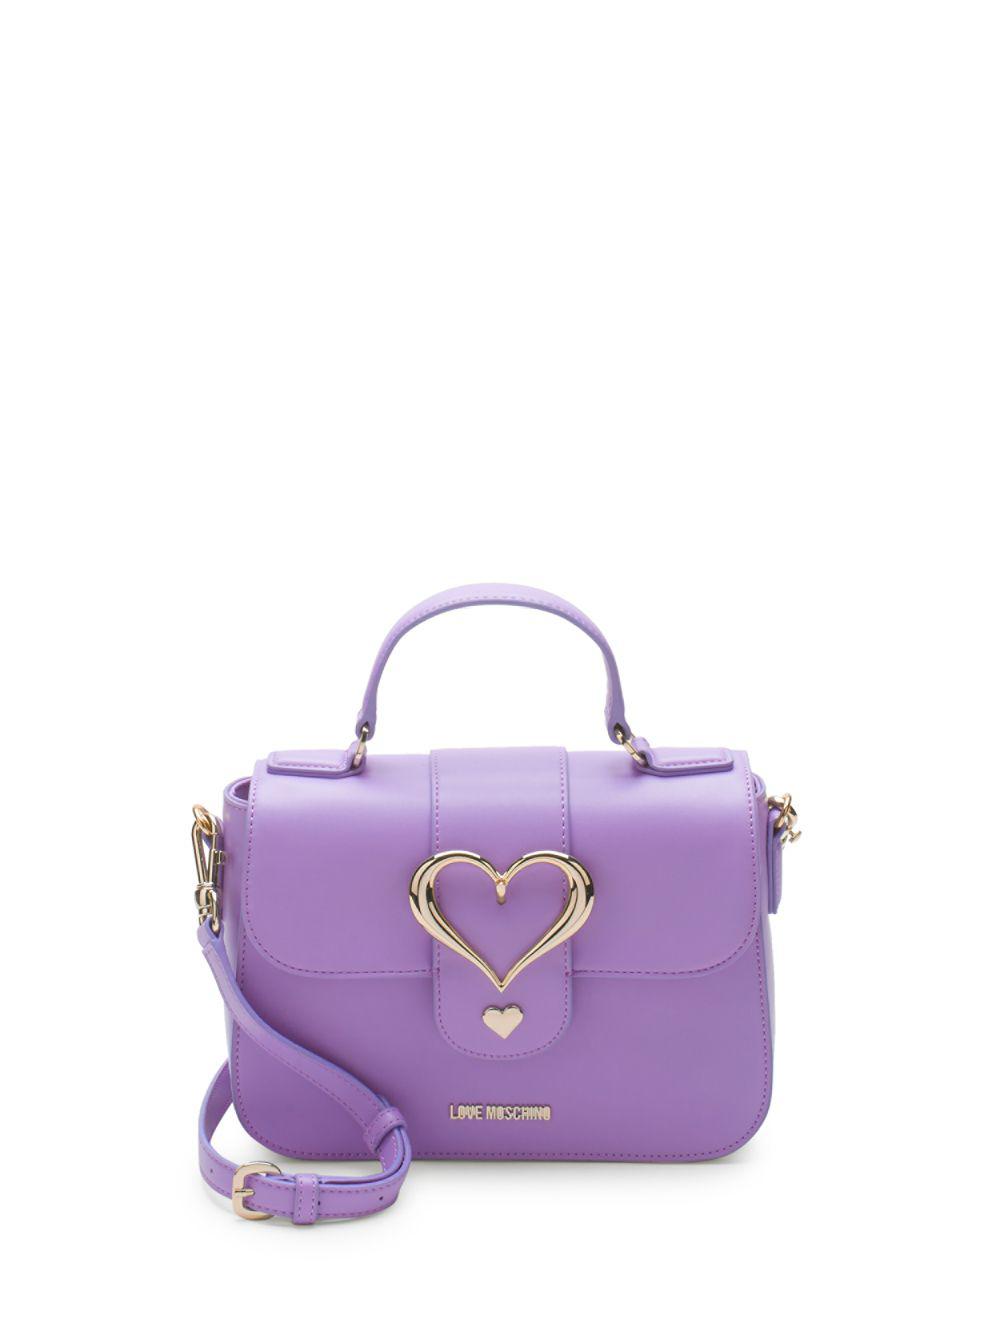 Love Moschino Heart Crossbody Satchel Bag in Violet (Purple) - Lyst